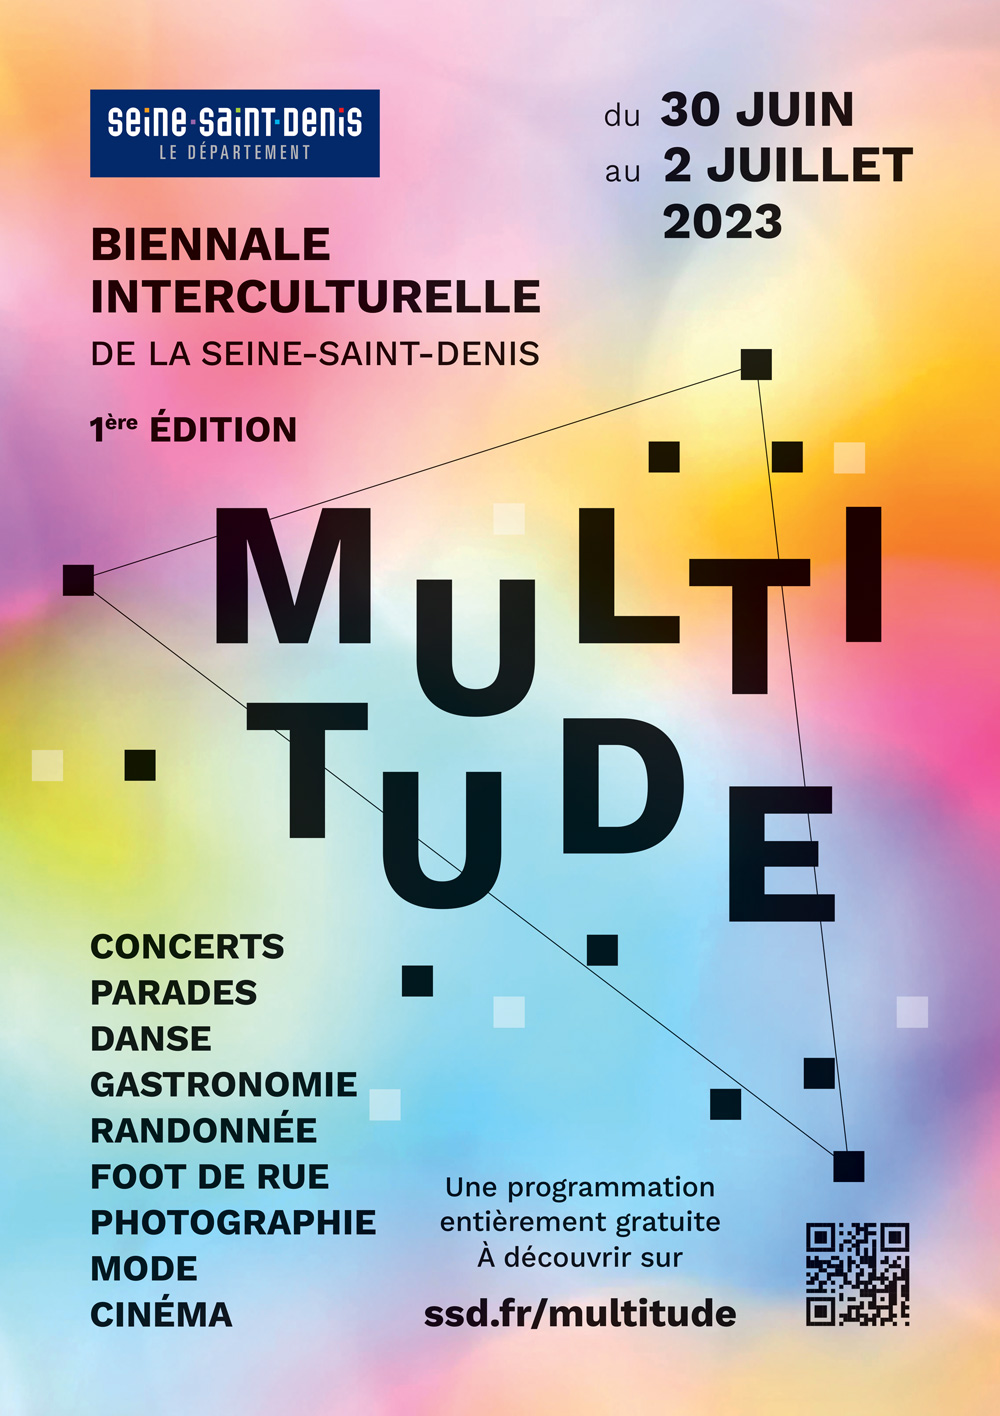 villetaneuse_multitude_juin_juillet_2023_biennale_interculturelle_seine_saint_denis_departement